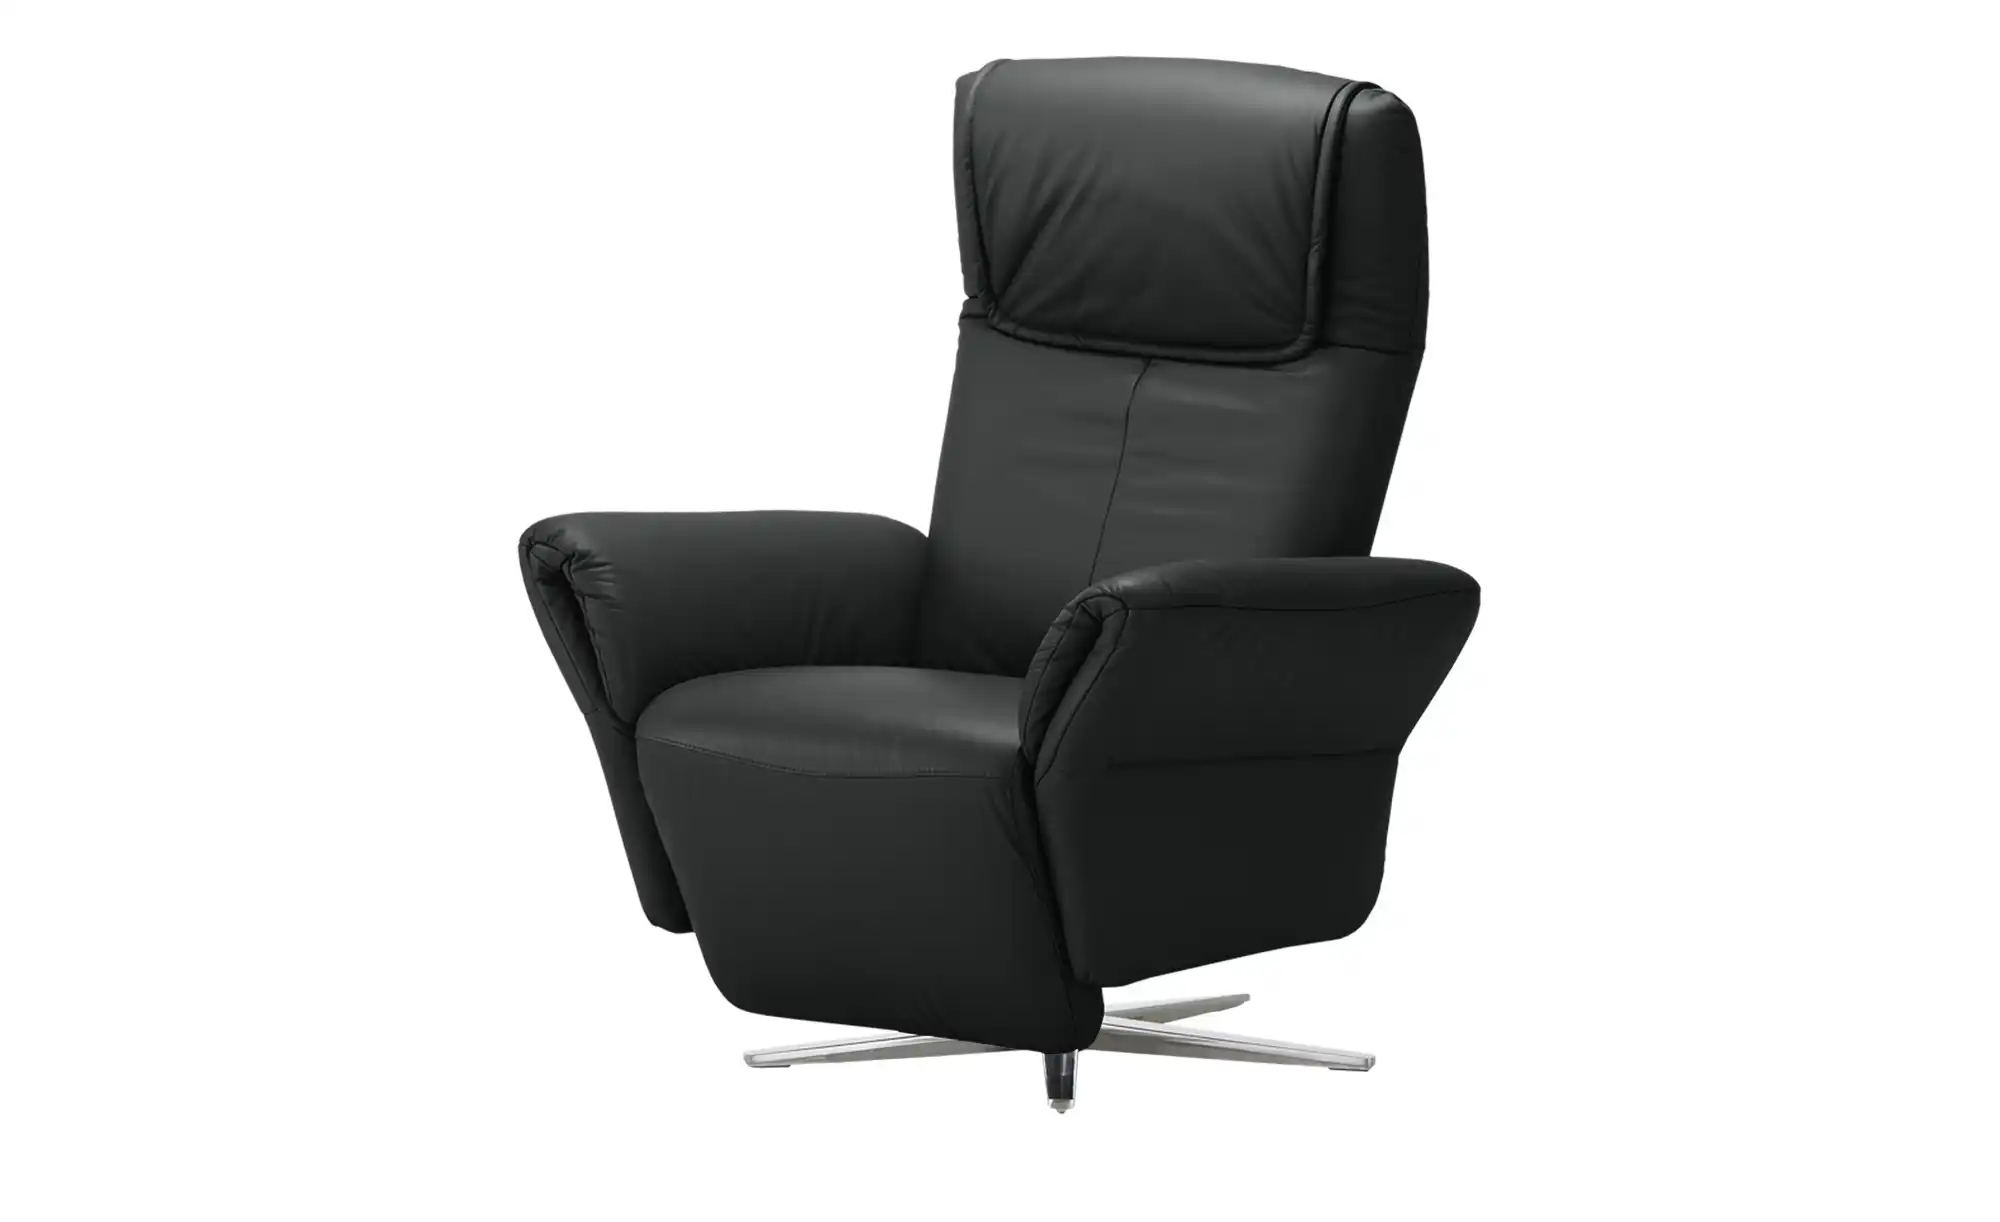 Musterring Relaxsessel MR 380 ¦ schwarz Polstermöbel Sessel Fernsehsessel Höffner  - Onlineshop Möbel Höffner